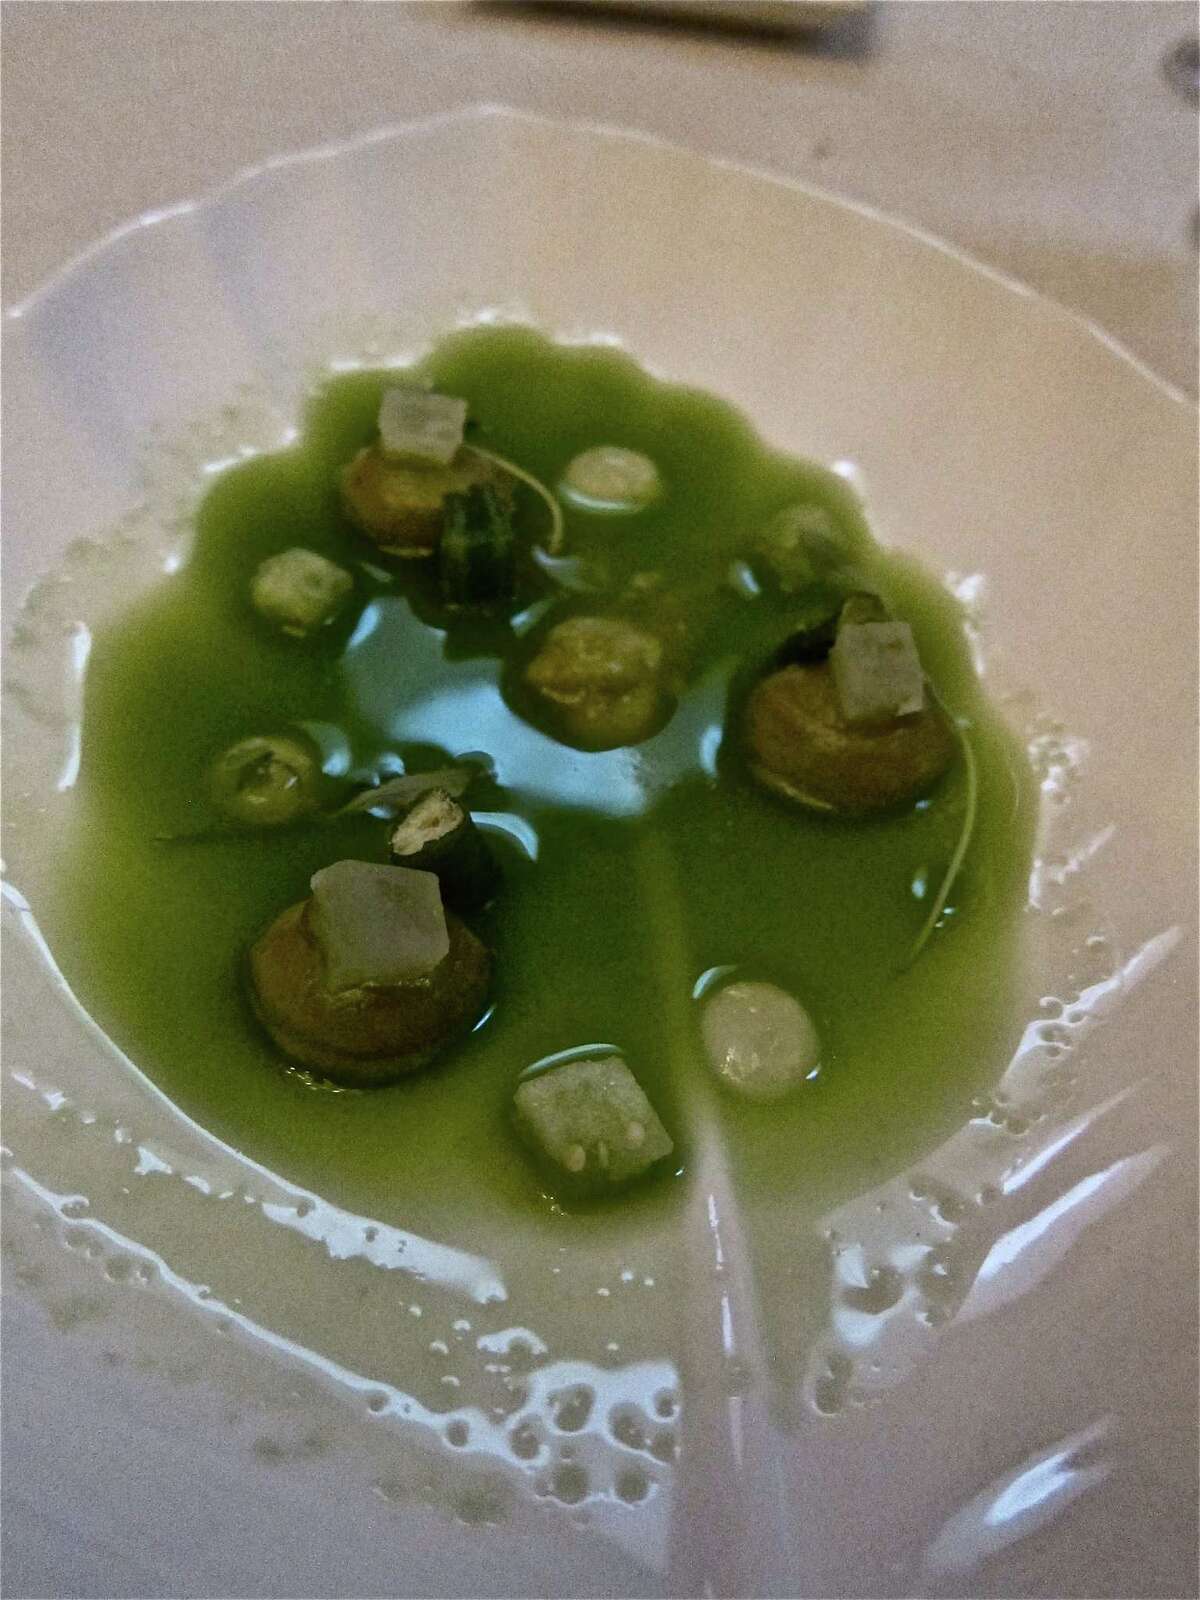 The Roca brothersâ 17-course dinner included this "green saladâ that came in a shiny pool of cucumber juice.